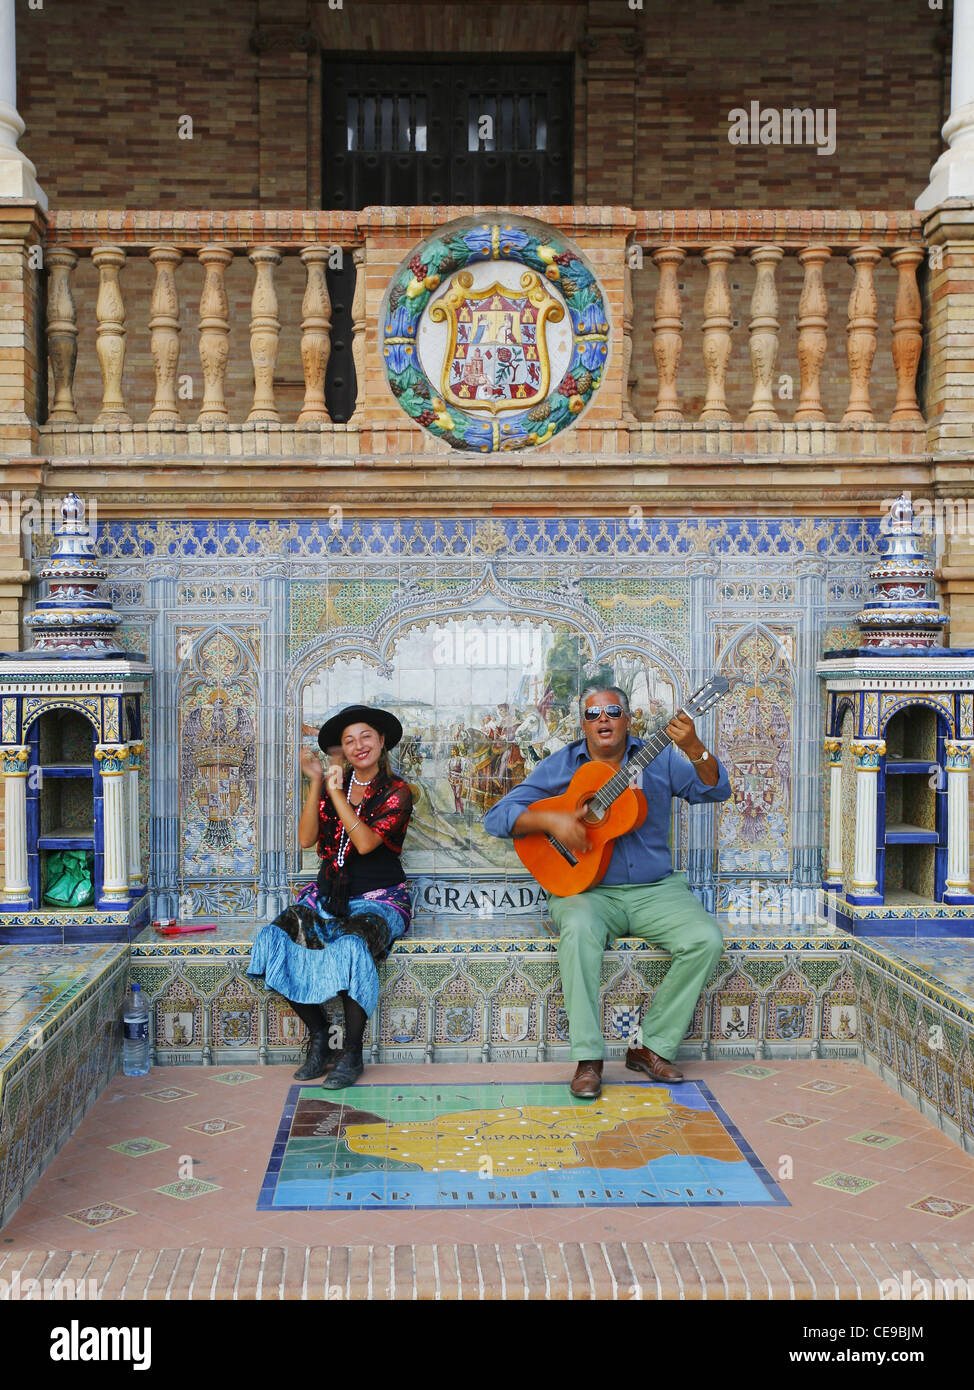 Flamenco-Musikern im Granada Alkoven von der Plaza de España in Sevilla, Spanien Stockfoto